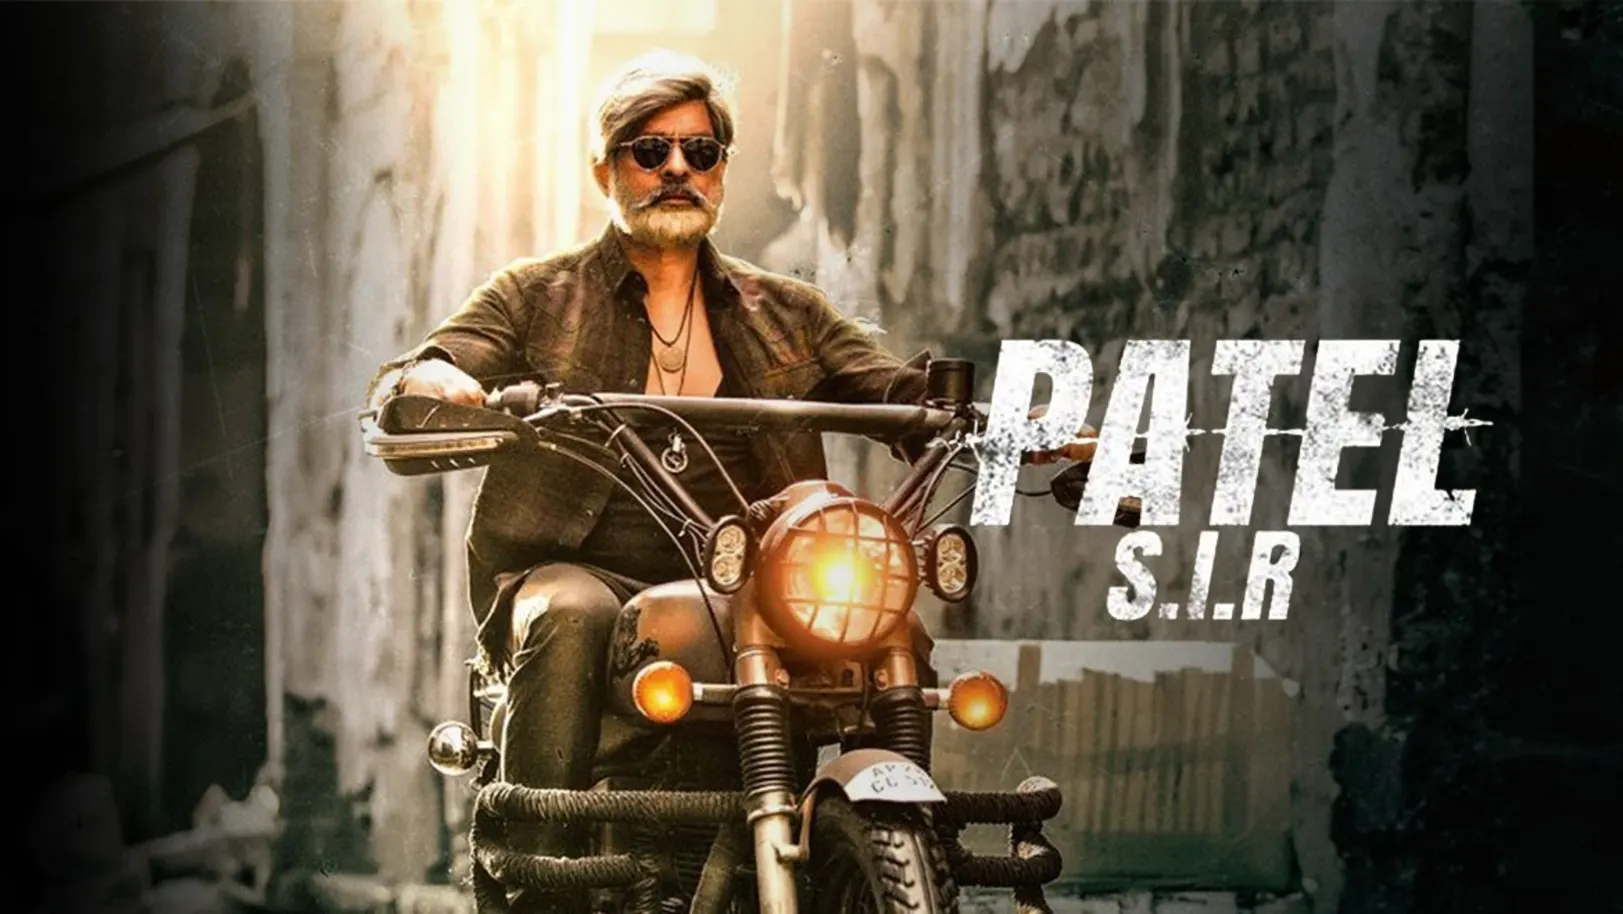 Patel S.I.R Movie